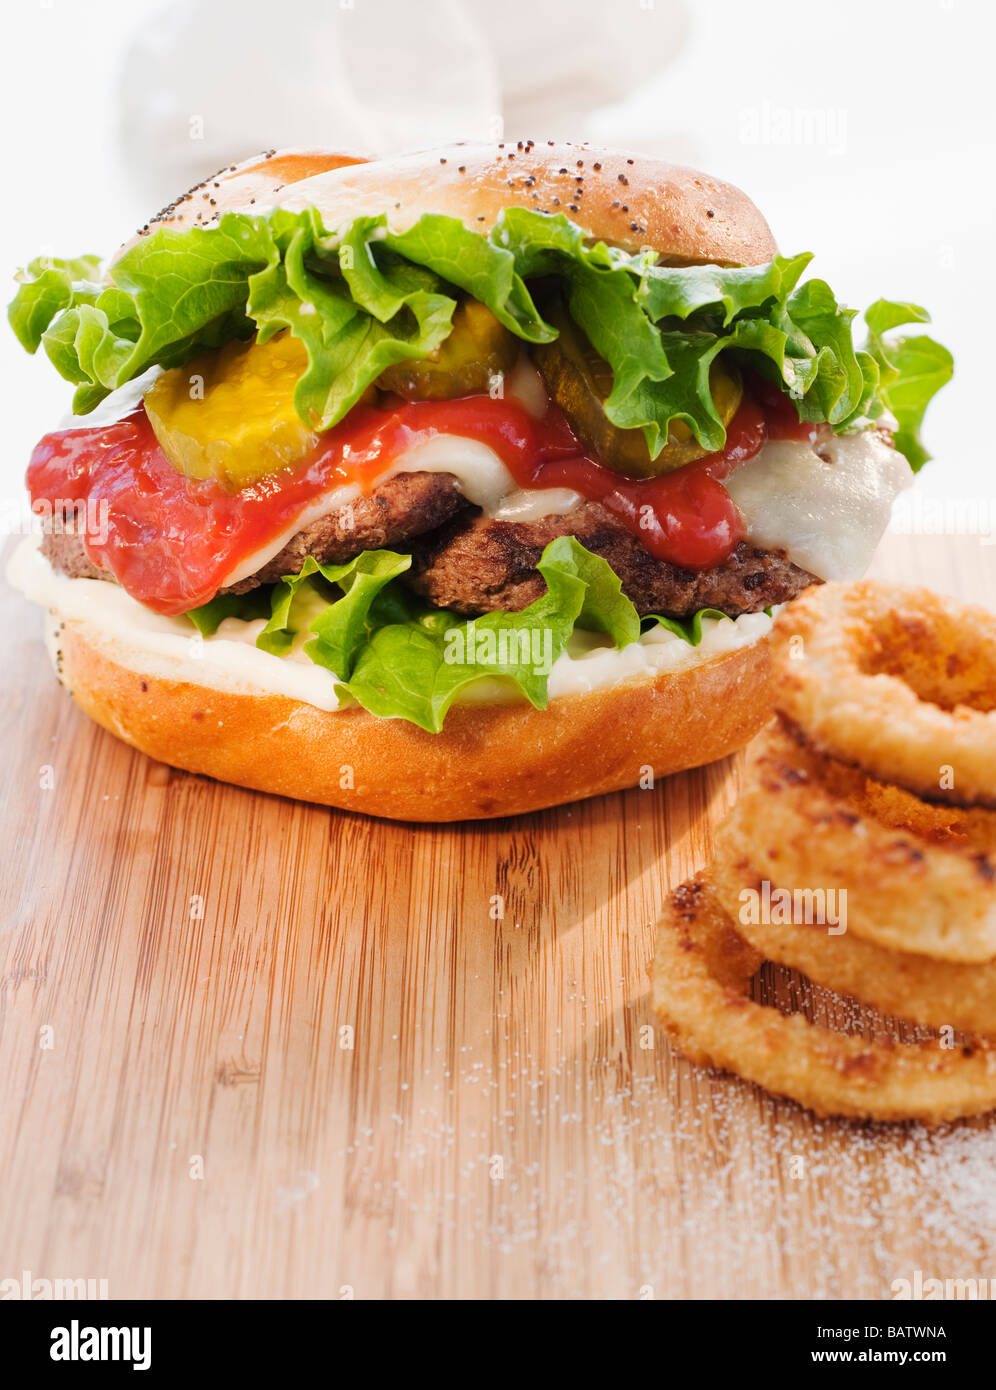 Studio shot of hamburger Stock Photo